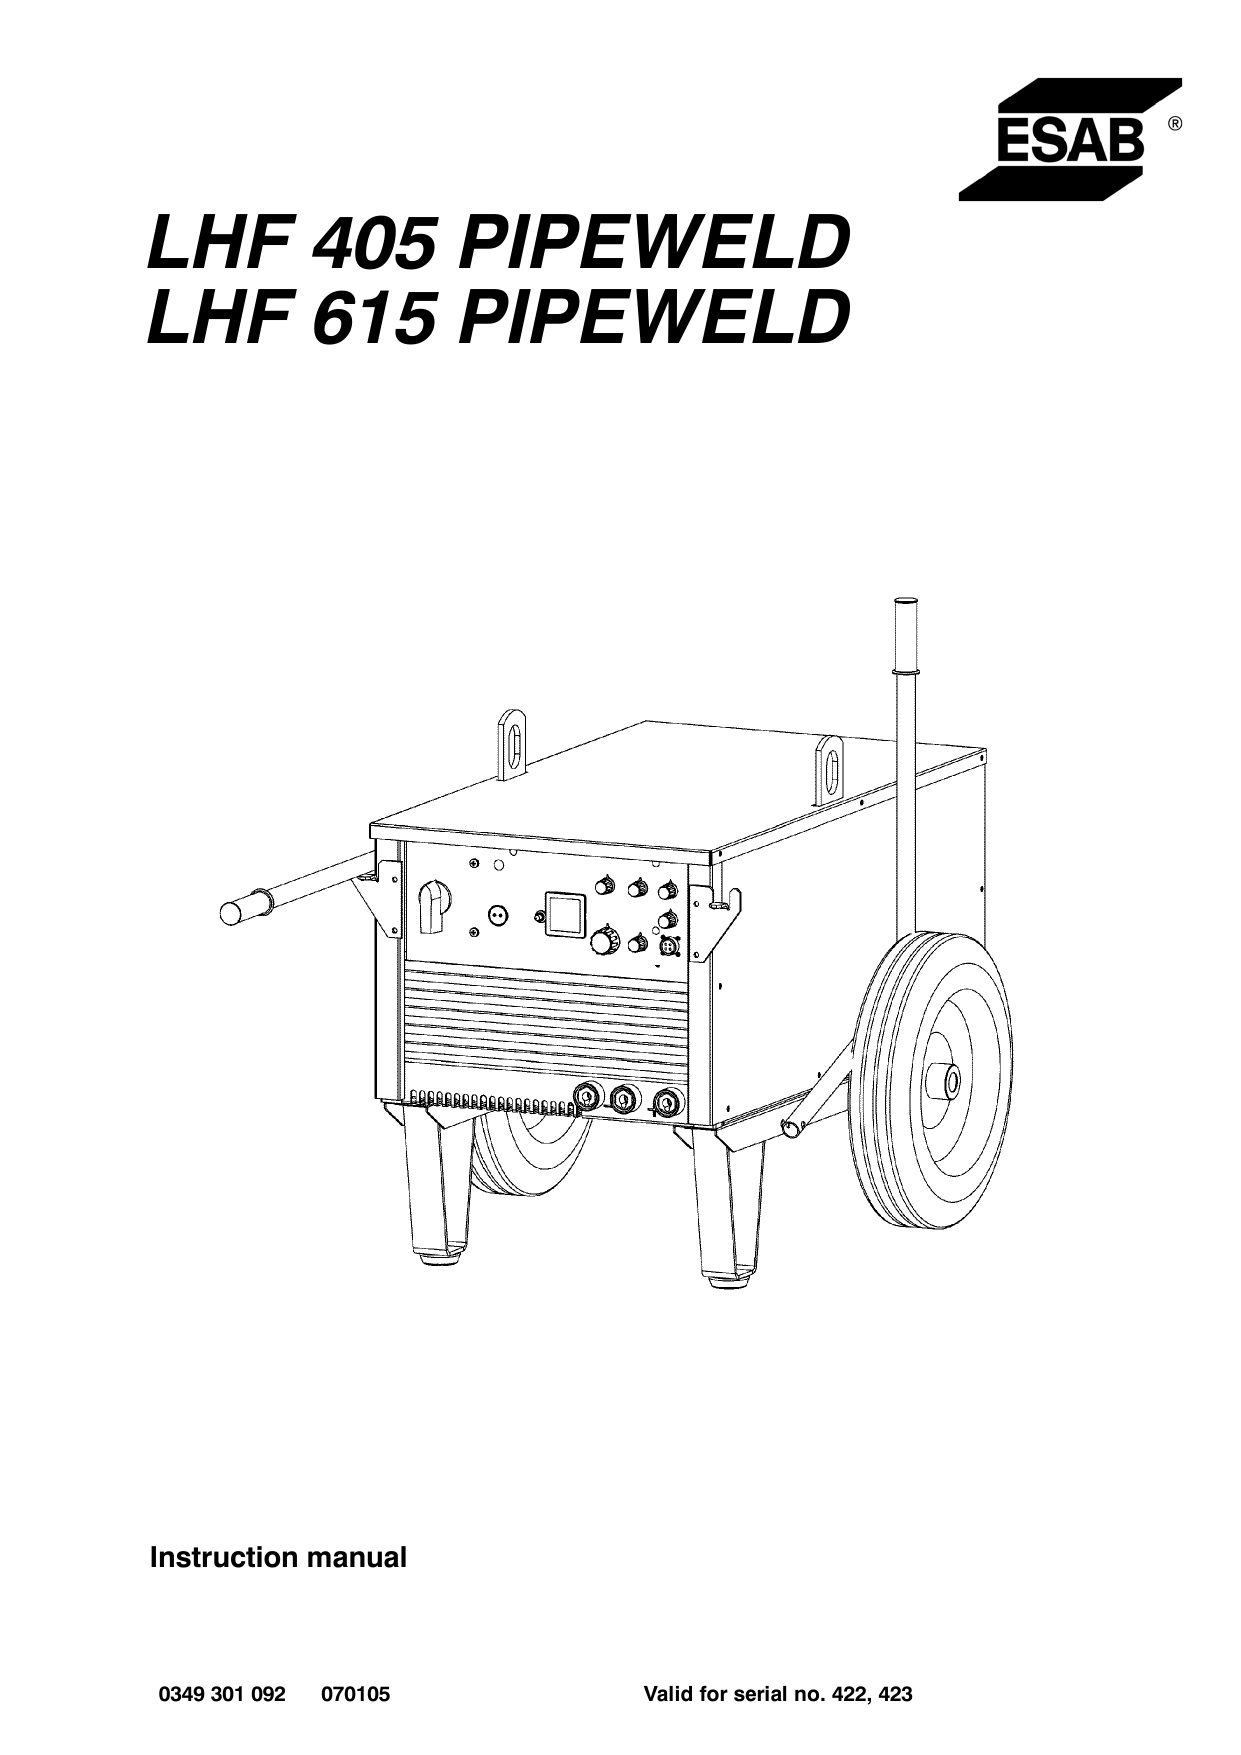 LHF 405 Pipeweld